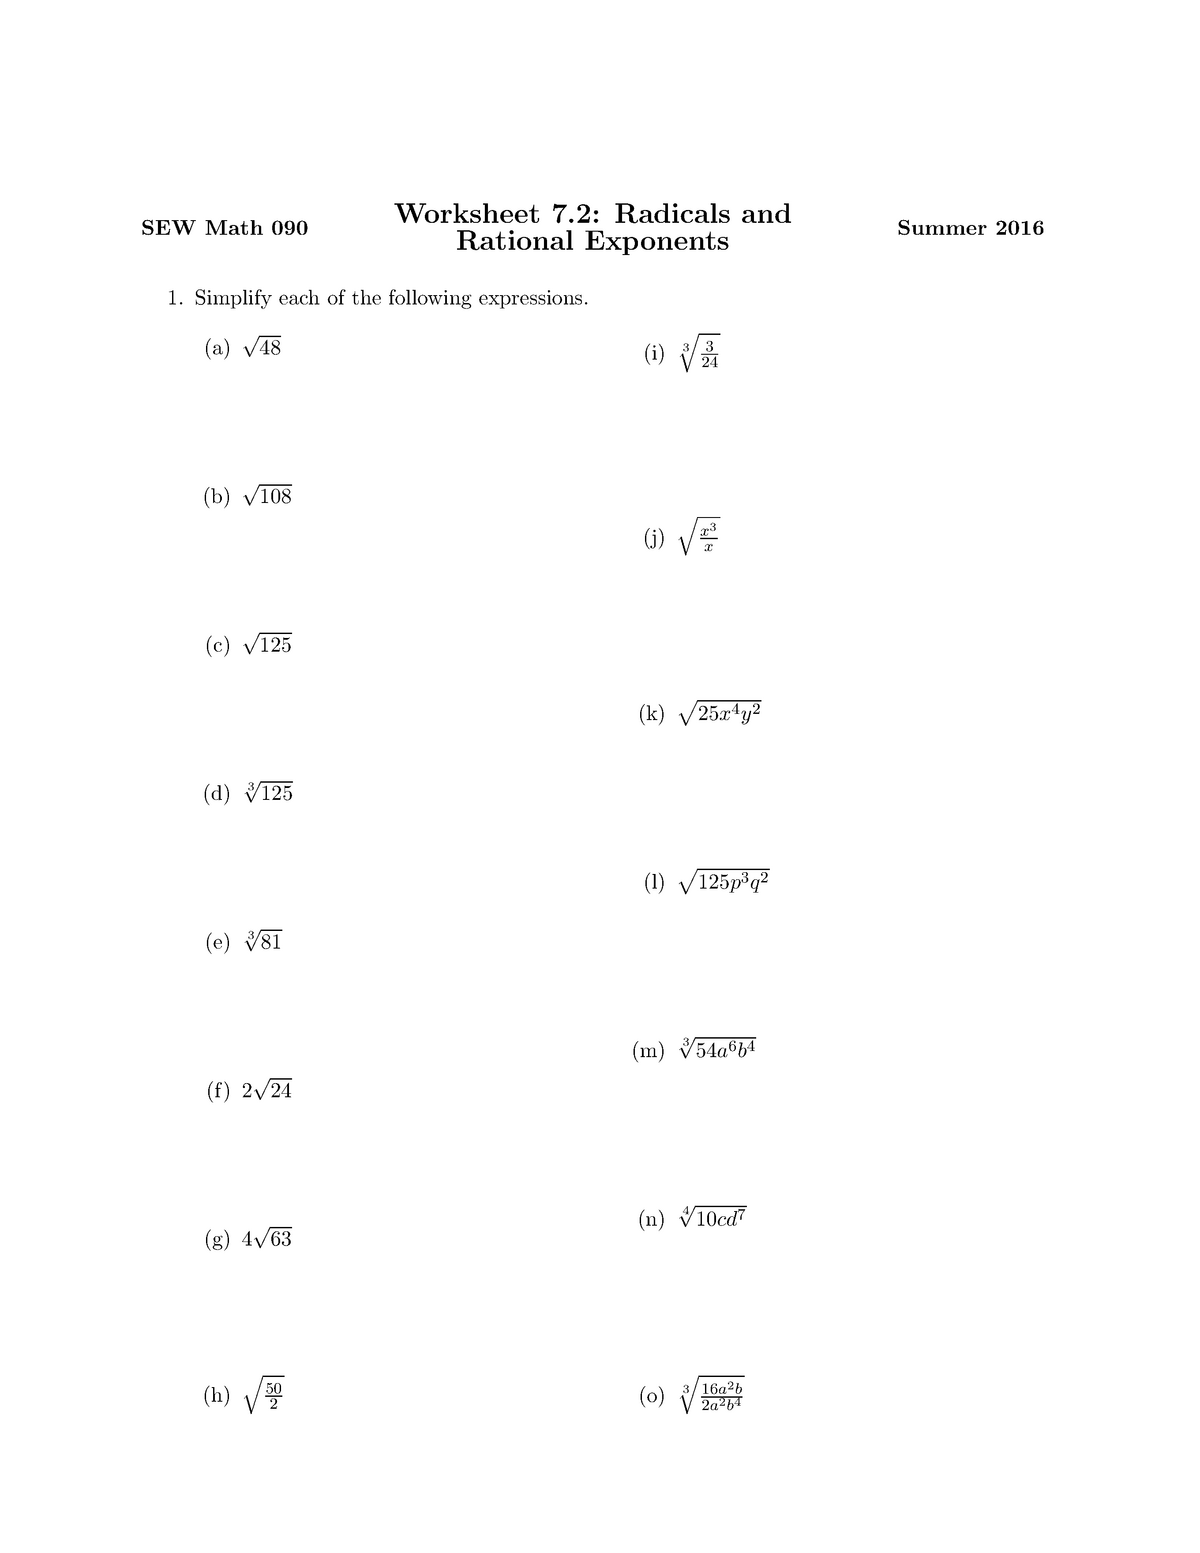 SEW Math worksheet 2222.22 - SEW Math 22 Worksheet 2222: Radicals and Inside Radical And Rational Exponents Worksheet